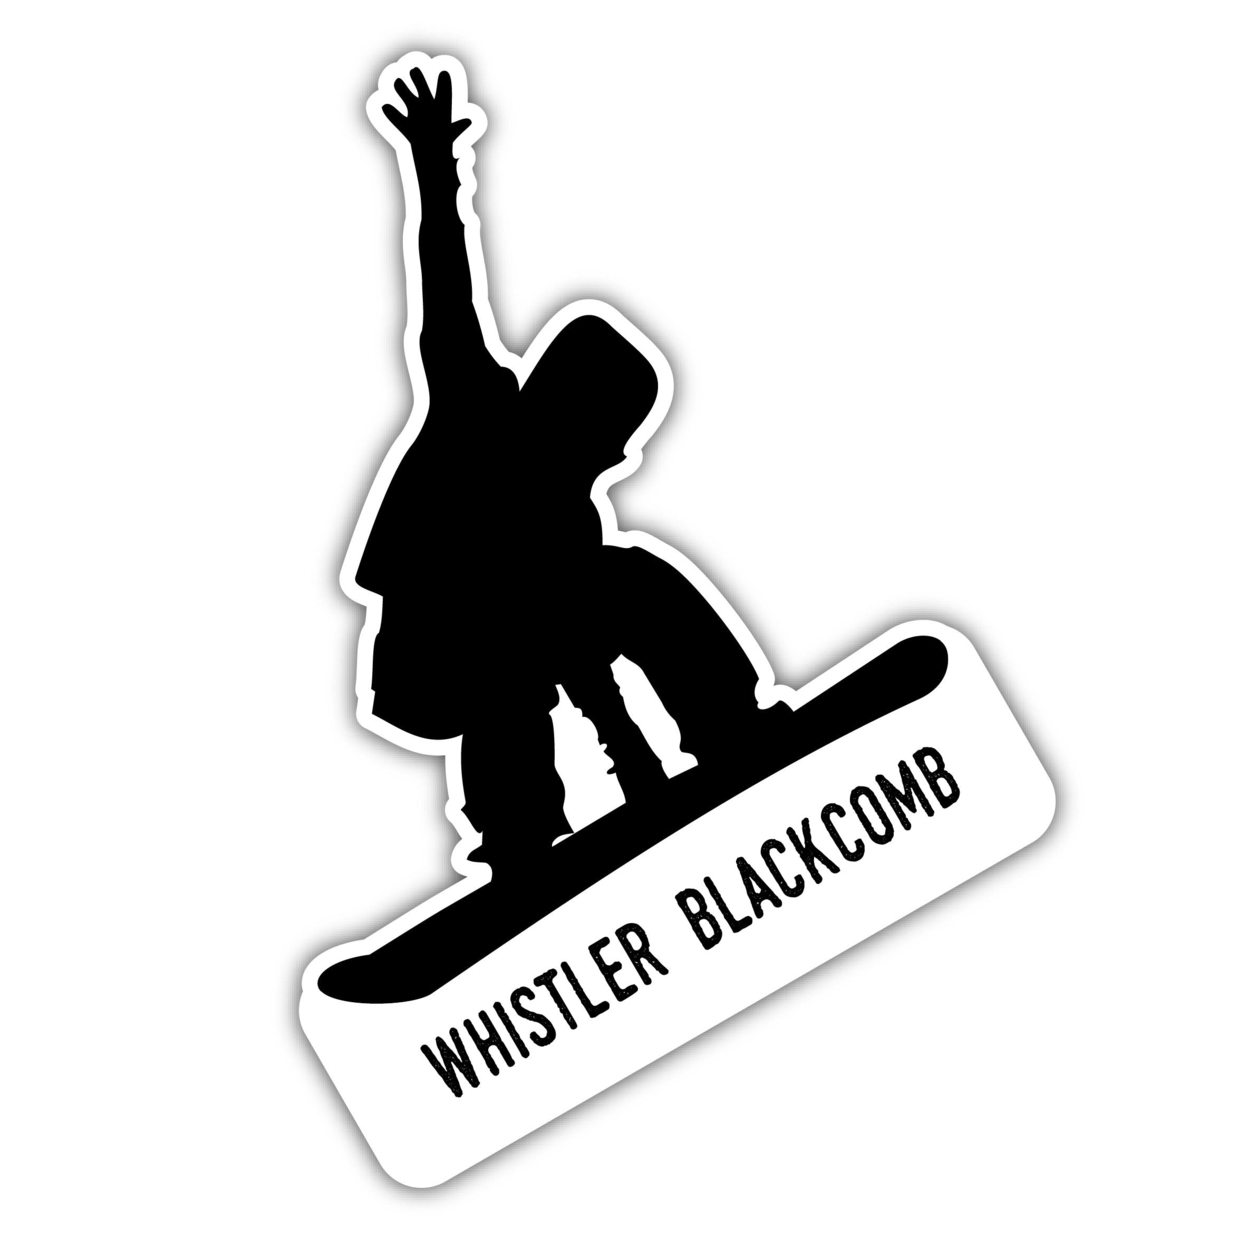 Whistler Blackcomb British Columbia Ski Adventures Souvenir Approximately 5 X 2.5-Inch Vinyl Decal Sticker Goggle Design